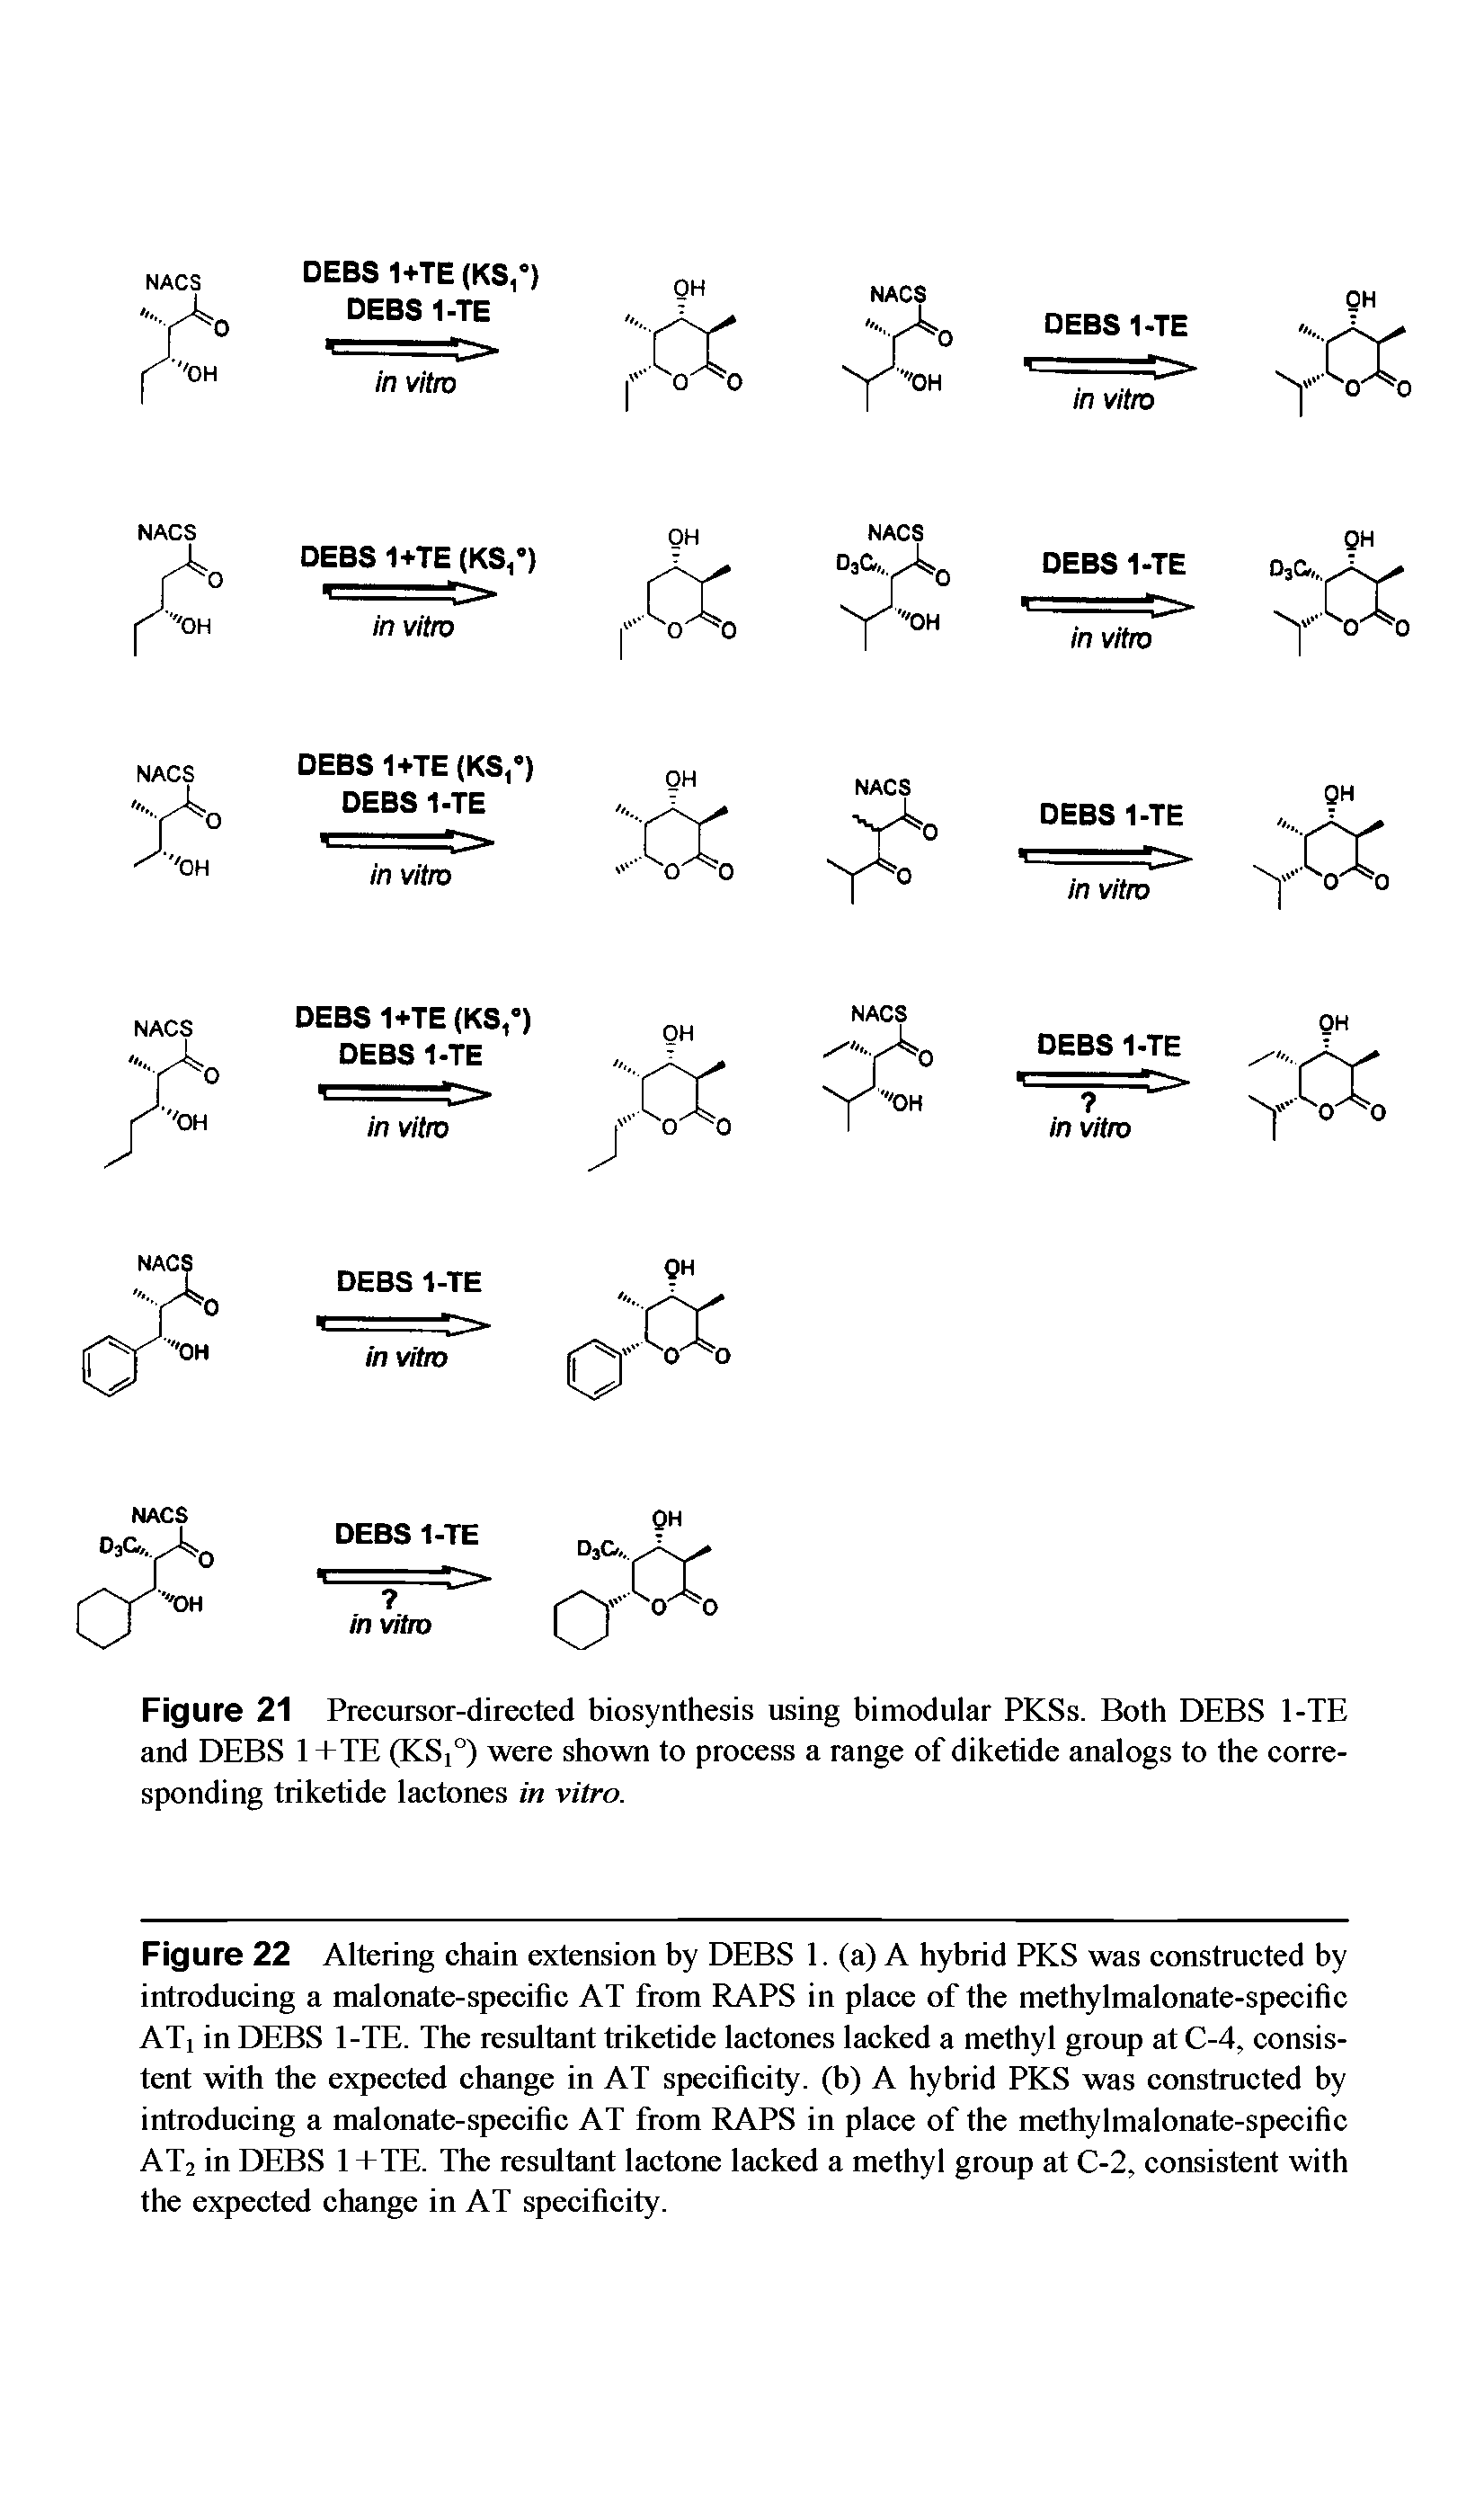 Figure 21 Precursor-directed biosynthesis using bimodular PKSs. Both DEBS 1-TE and DEBS 1+TE (KS,°) were shown to process a range of diketide analogs to the corresponding triketide lactones in vitro.